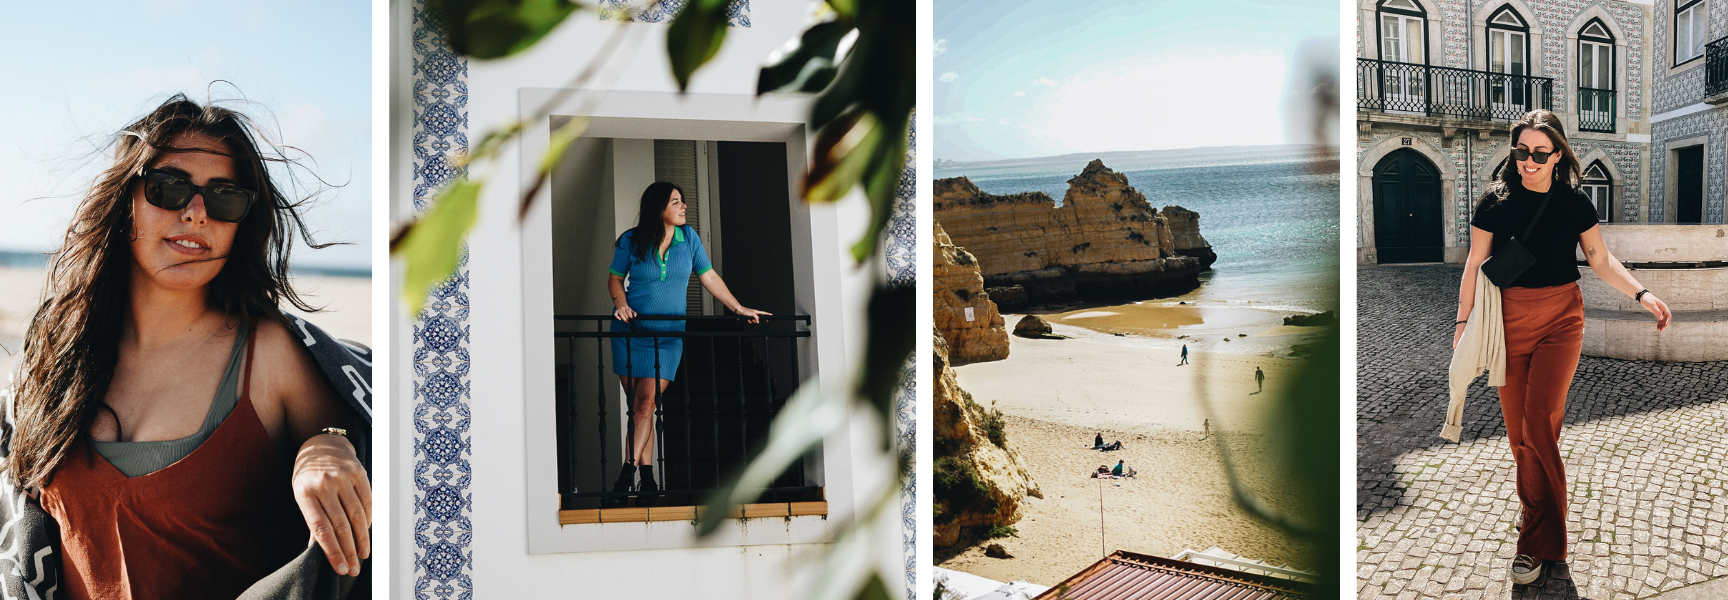 Peniche, Portugal // Andrew VanAsselt, Freelance Photographer